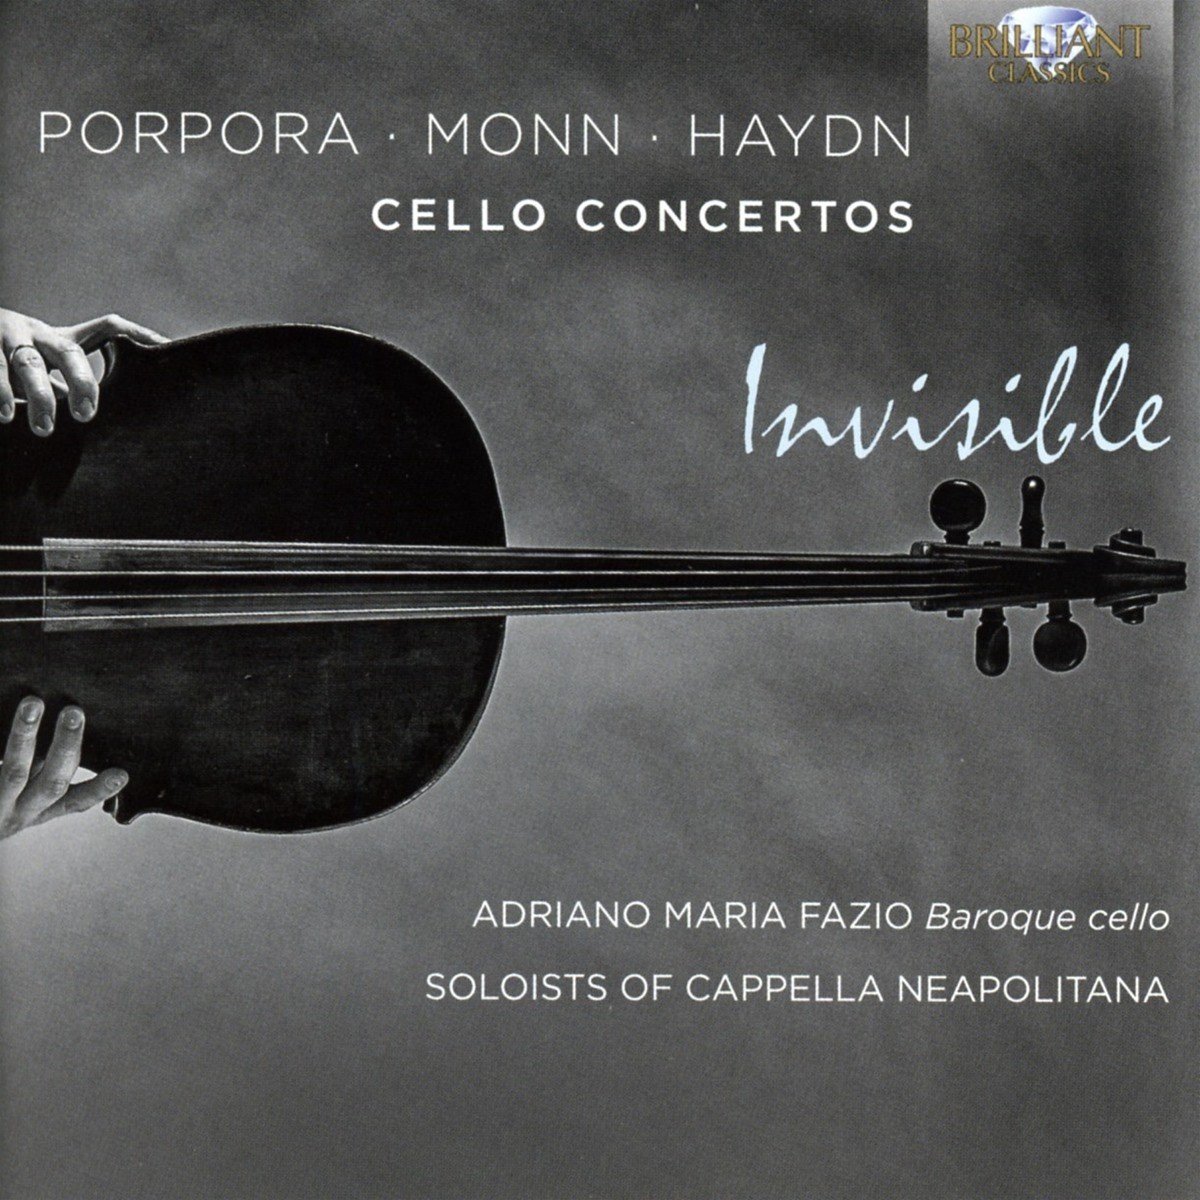 Adriano Fazio - Porpora, Monn, Haydn: Cello Concertos (CD) - Adriano Fazio